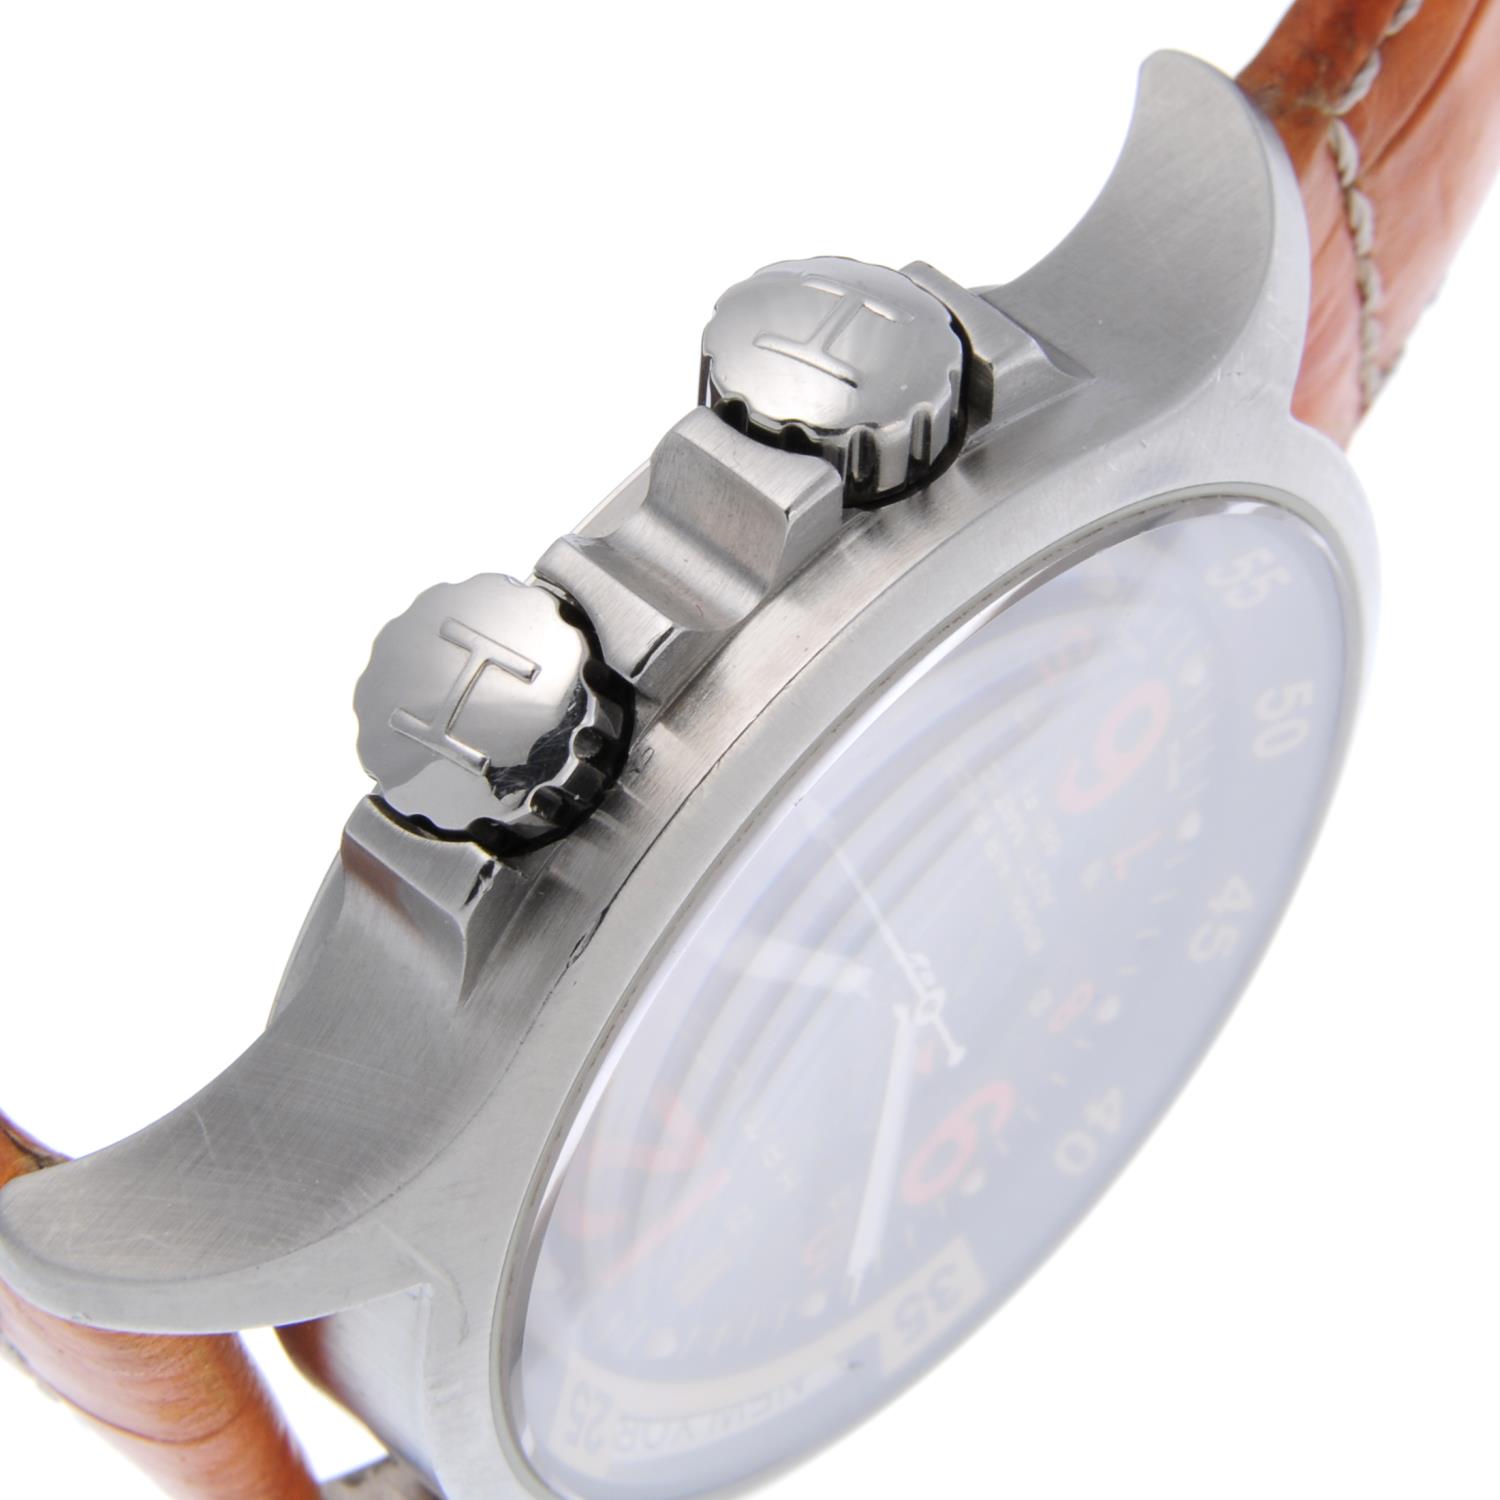 HAMILTON - a gentleman's Khaki Air Race wrist watch. - Image 3 of 5